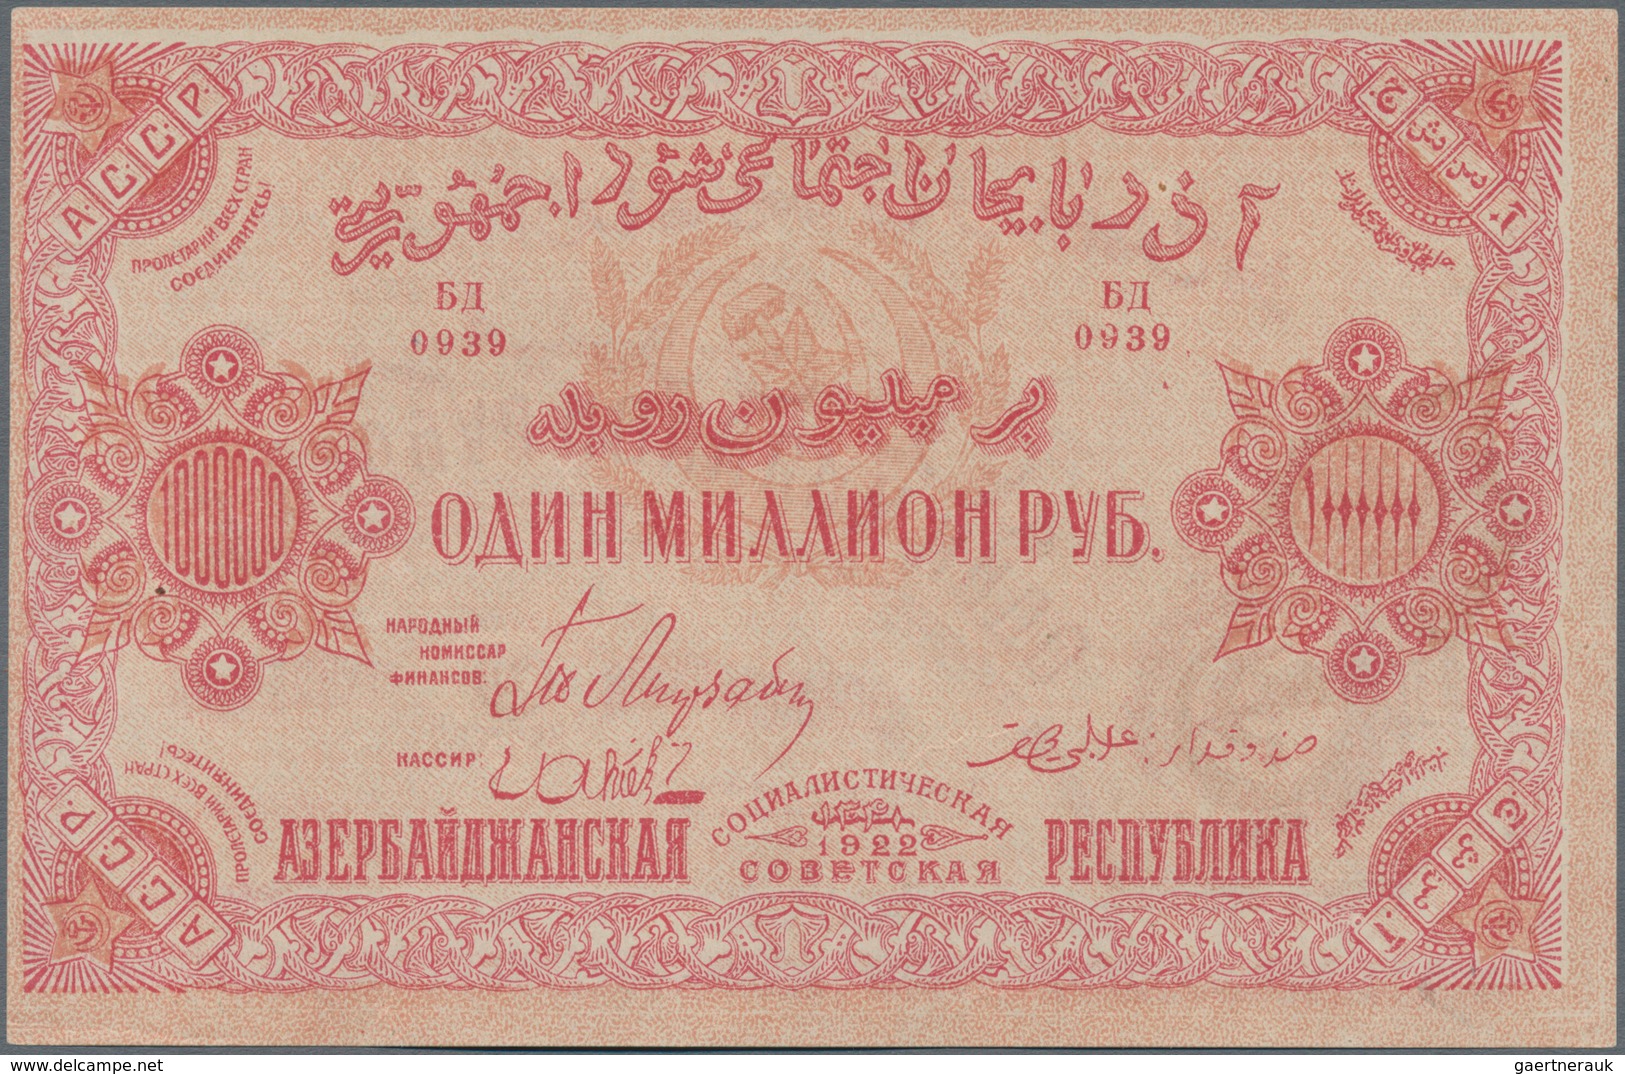 Russia / Russland: Transcaucasia – AZERBAIJAN Pair With 1000 And 1 Million Rubles 1920, P.S712, S719 - Russia